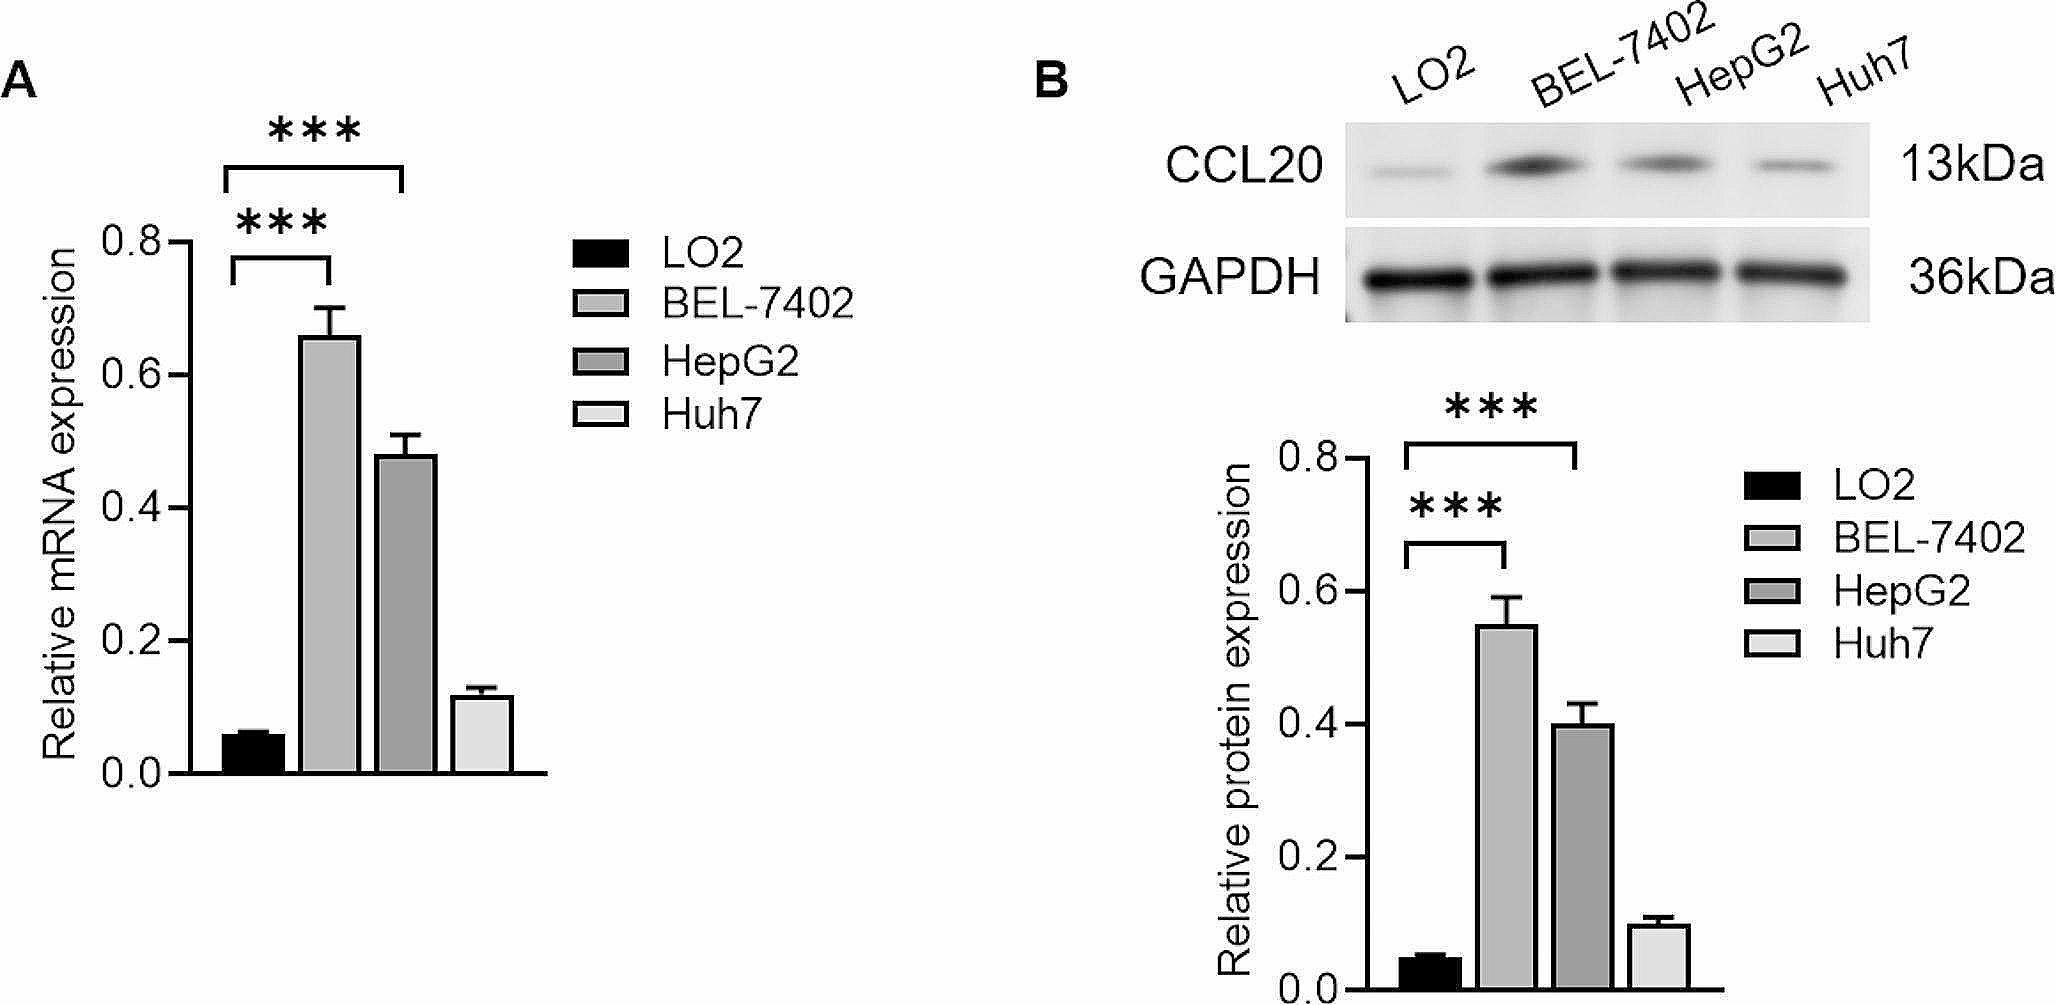 Multi-omics analysis reveals mechanism of Schisandra chinensis lignans and acteoside on EMT in hepatoma cells via ERK1/2 pathway